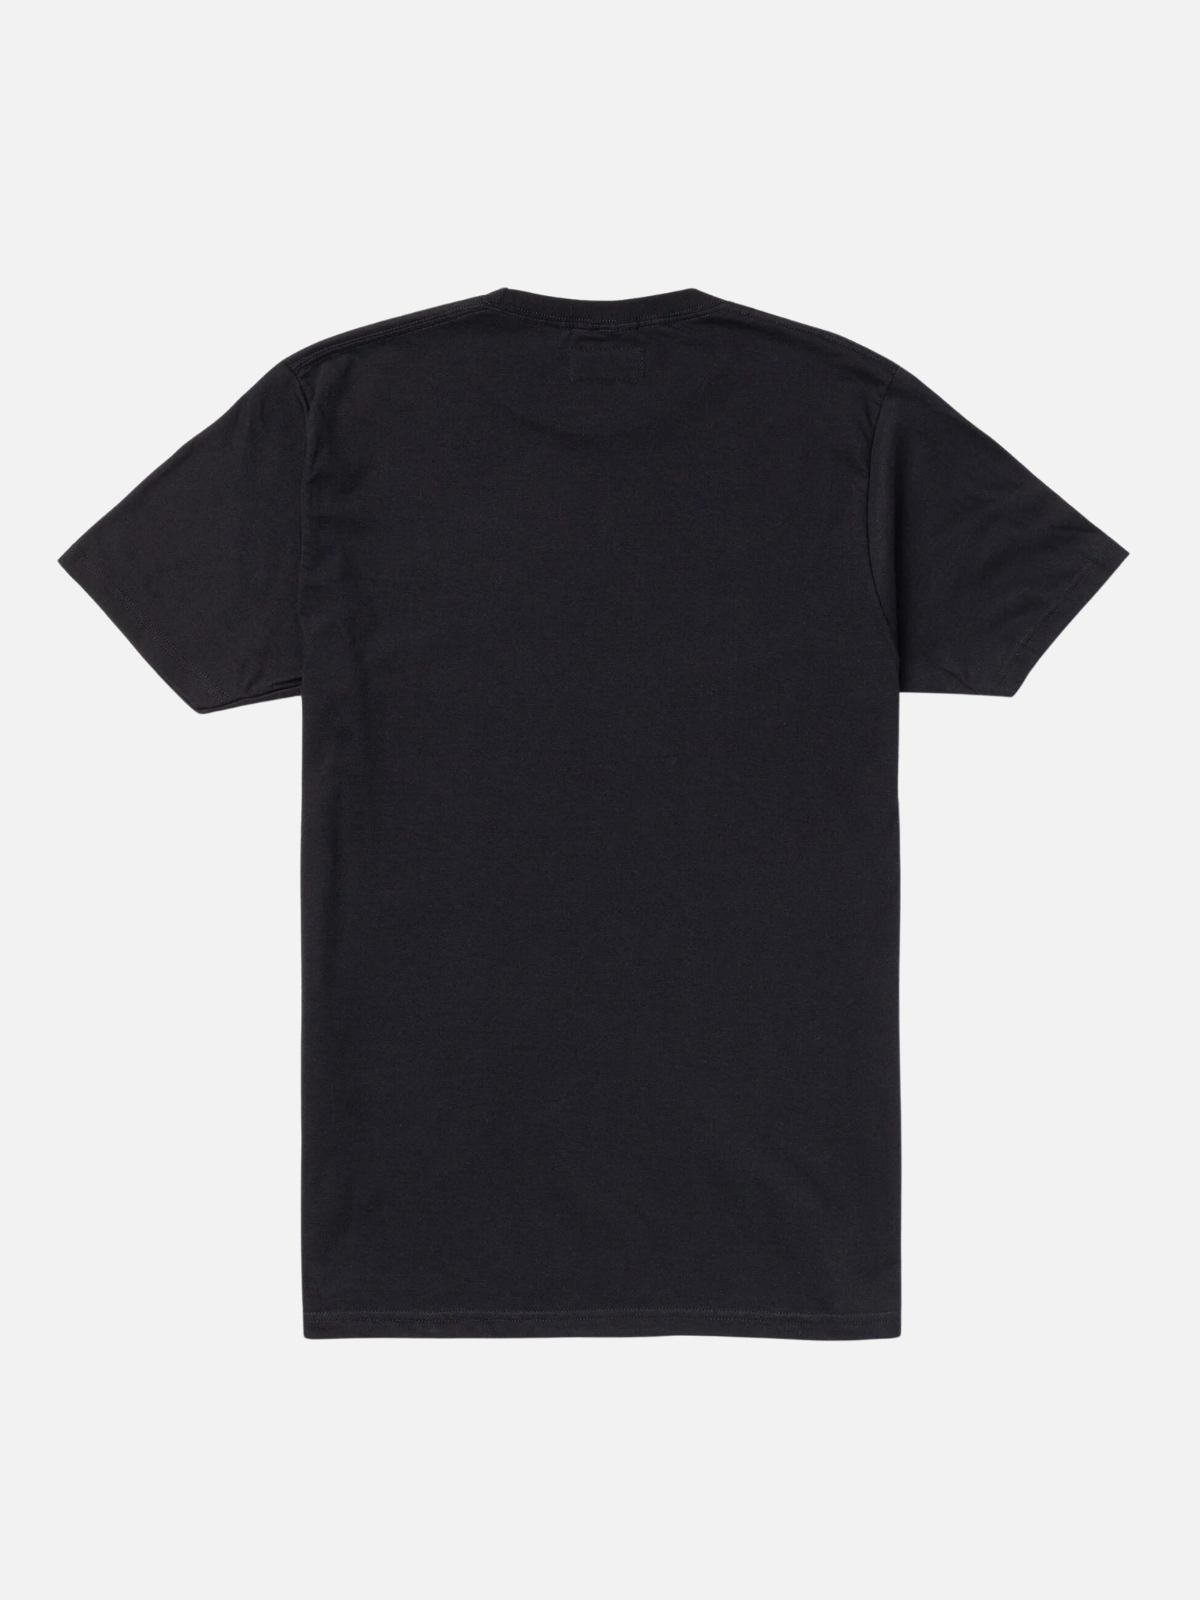 seager branded tee black white graphic t-shirt 100% cotton kempt athens ga georgia men's clothing store